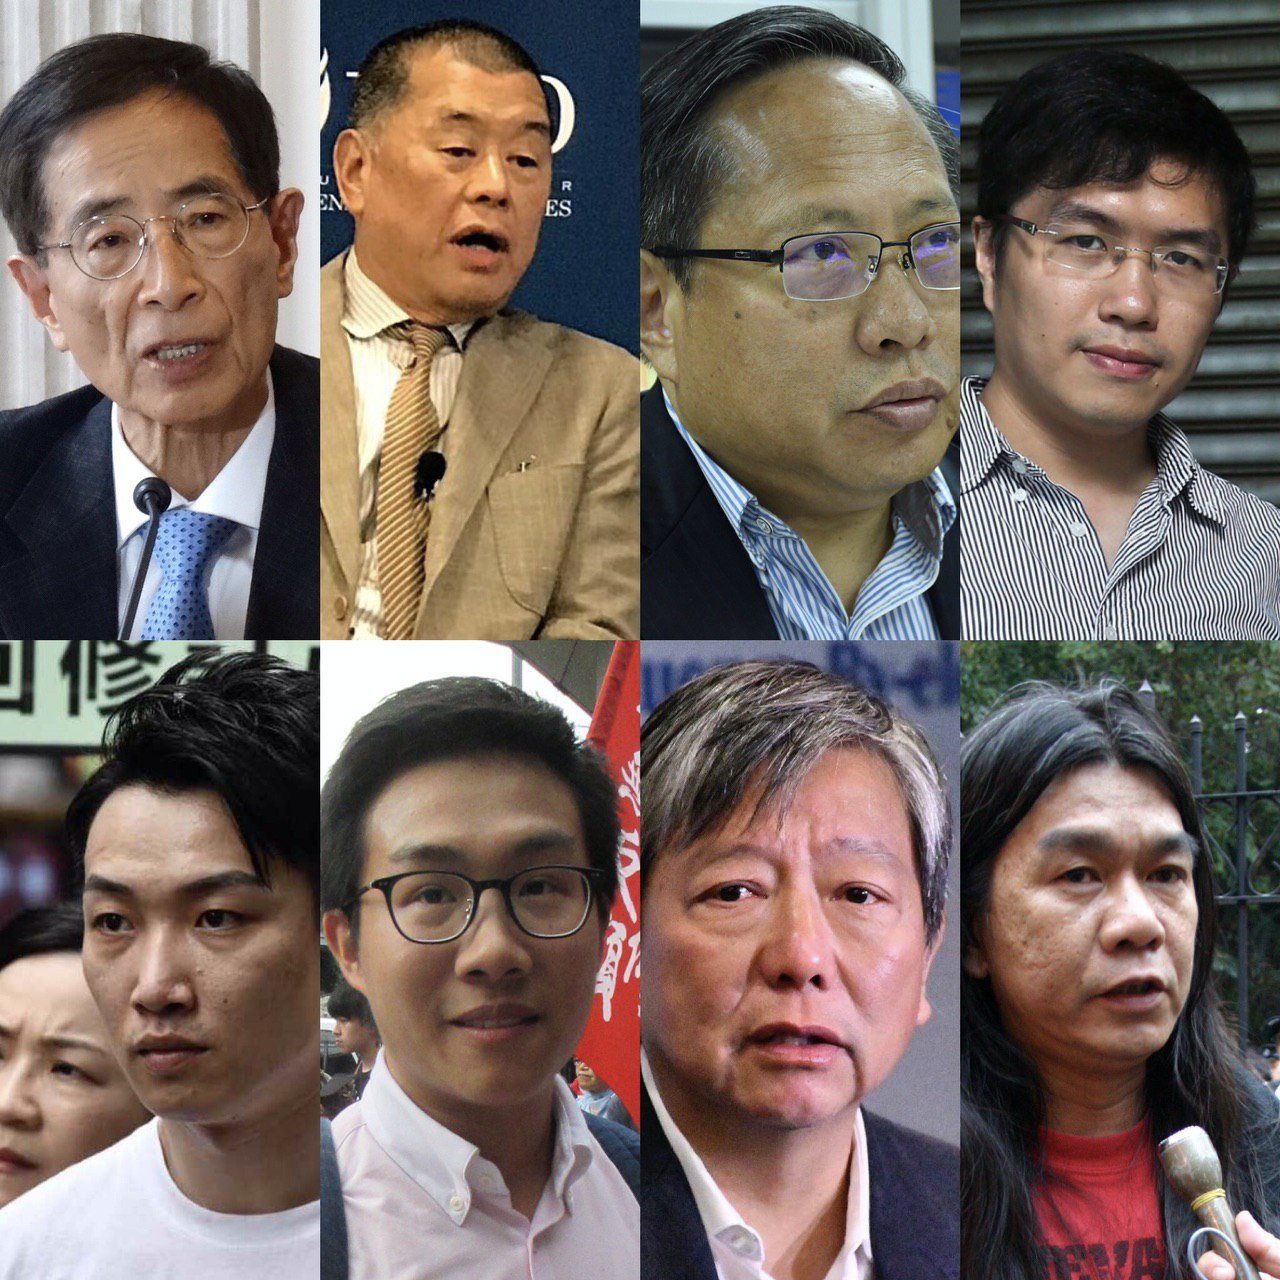 Mindestens 14 Verhaftungen prominenter Unterstützer der Protestbewegung in Hongkong